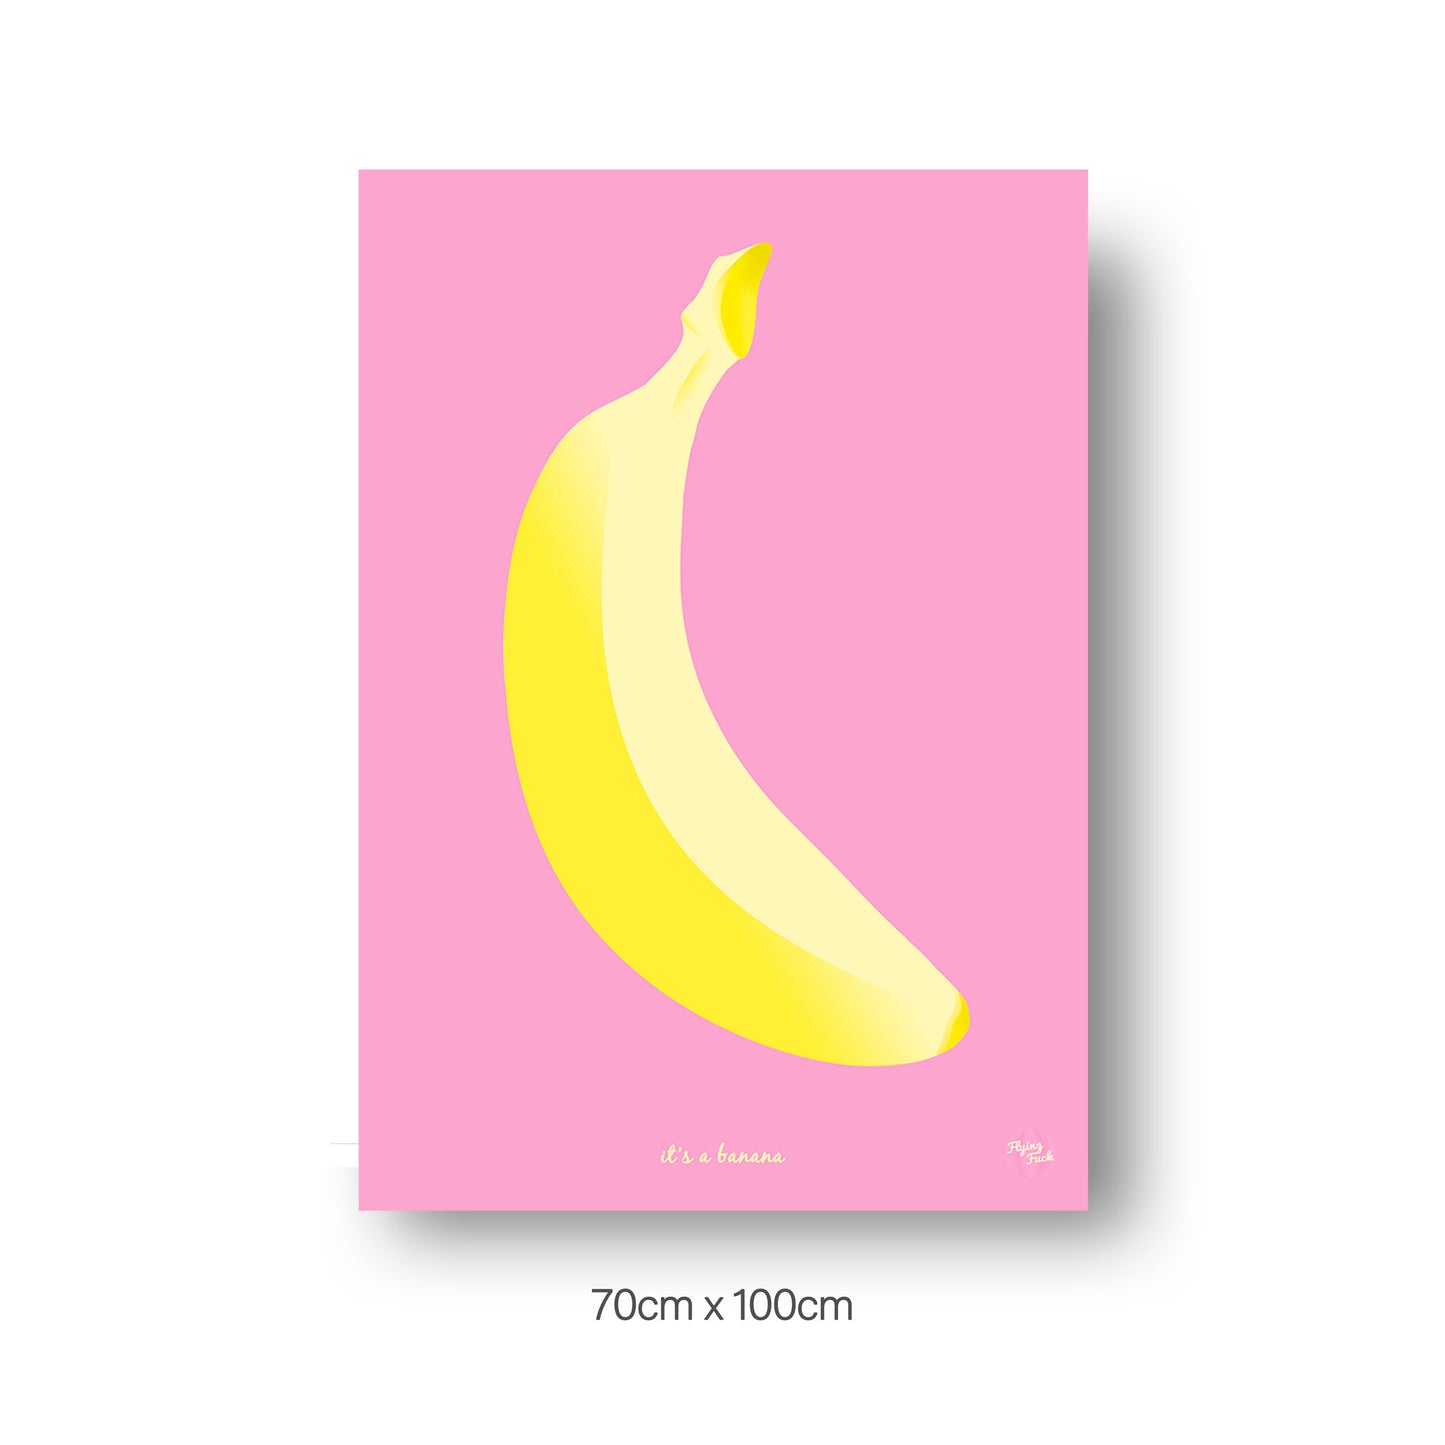 NOKUKO - art - Flying Fuck - It's a banana - Pink Yellow 70cmx100cm print